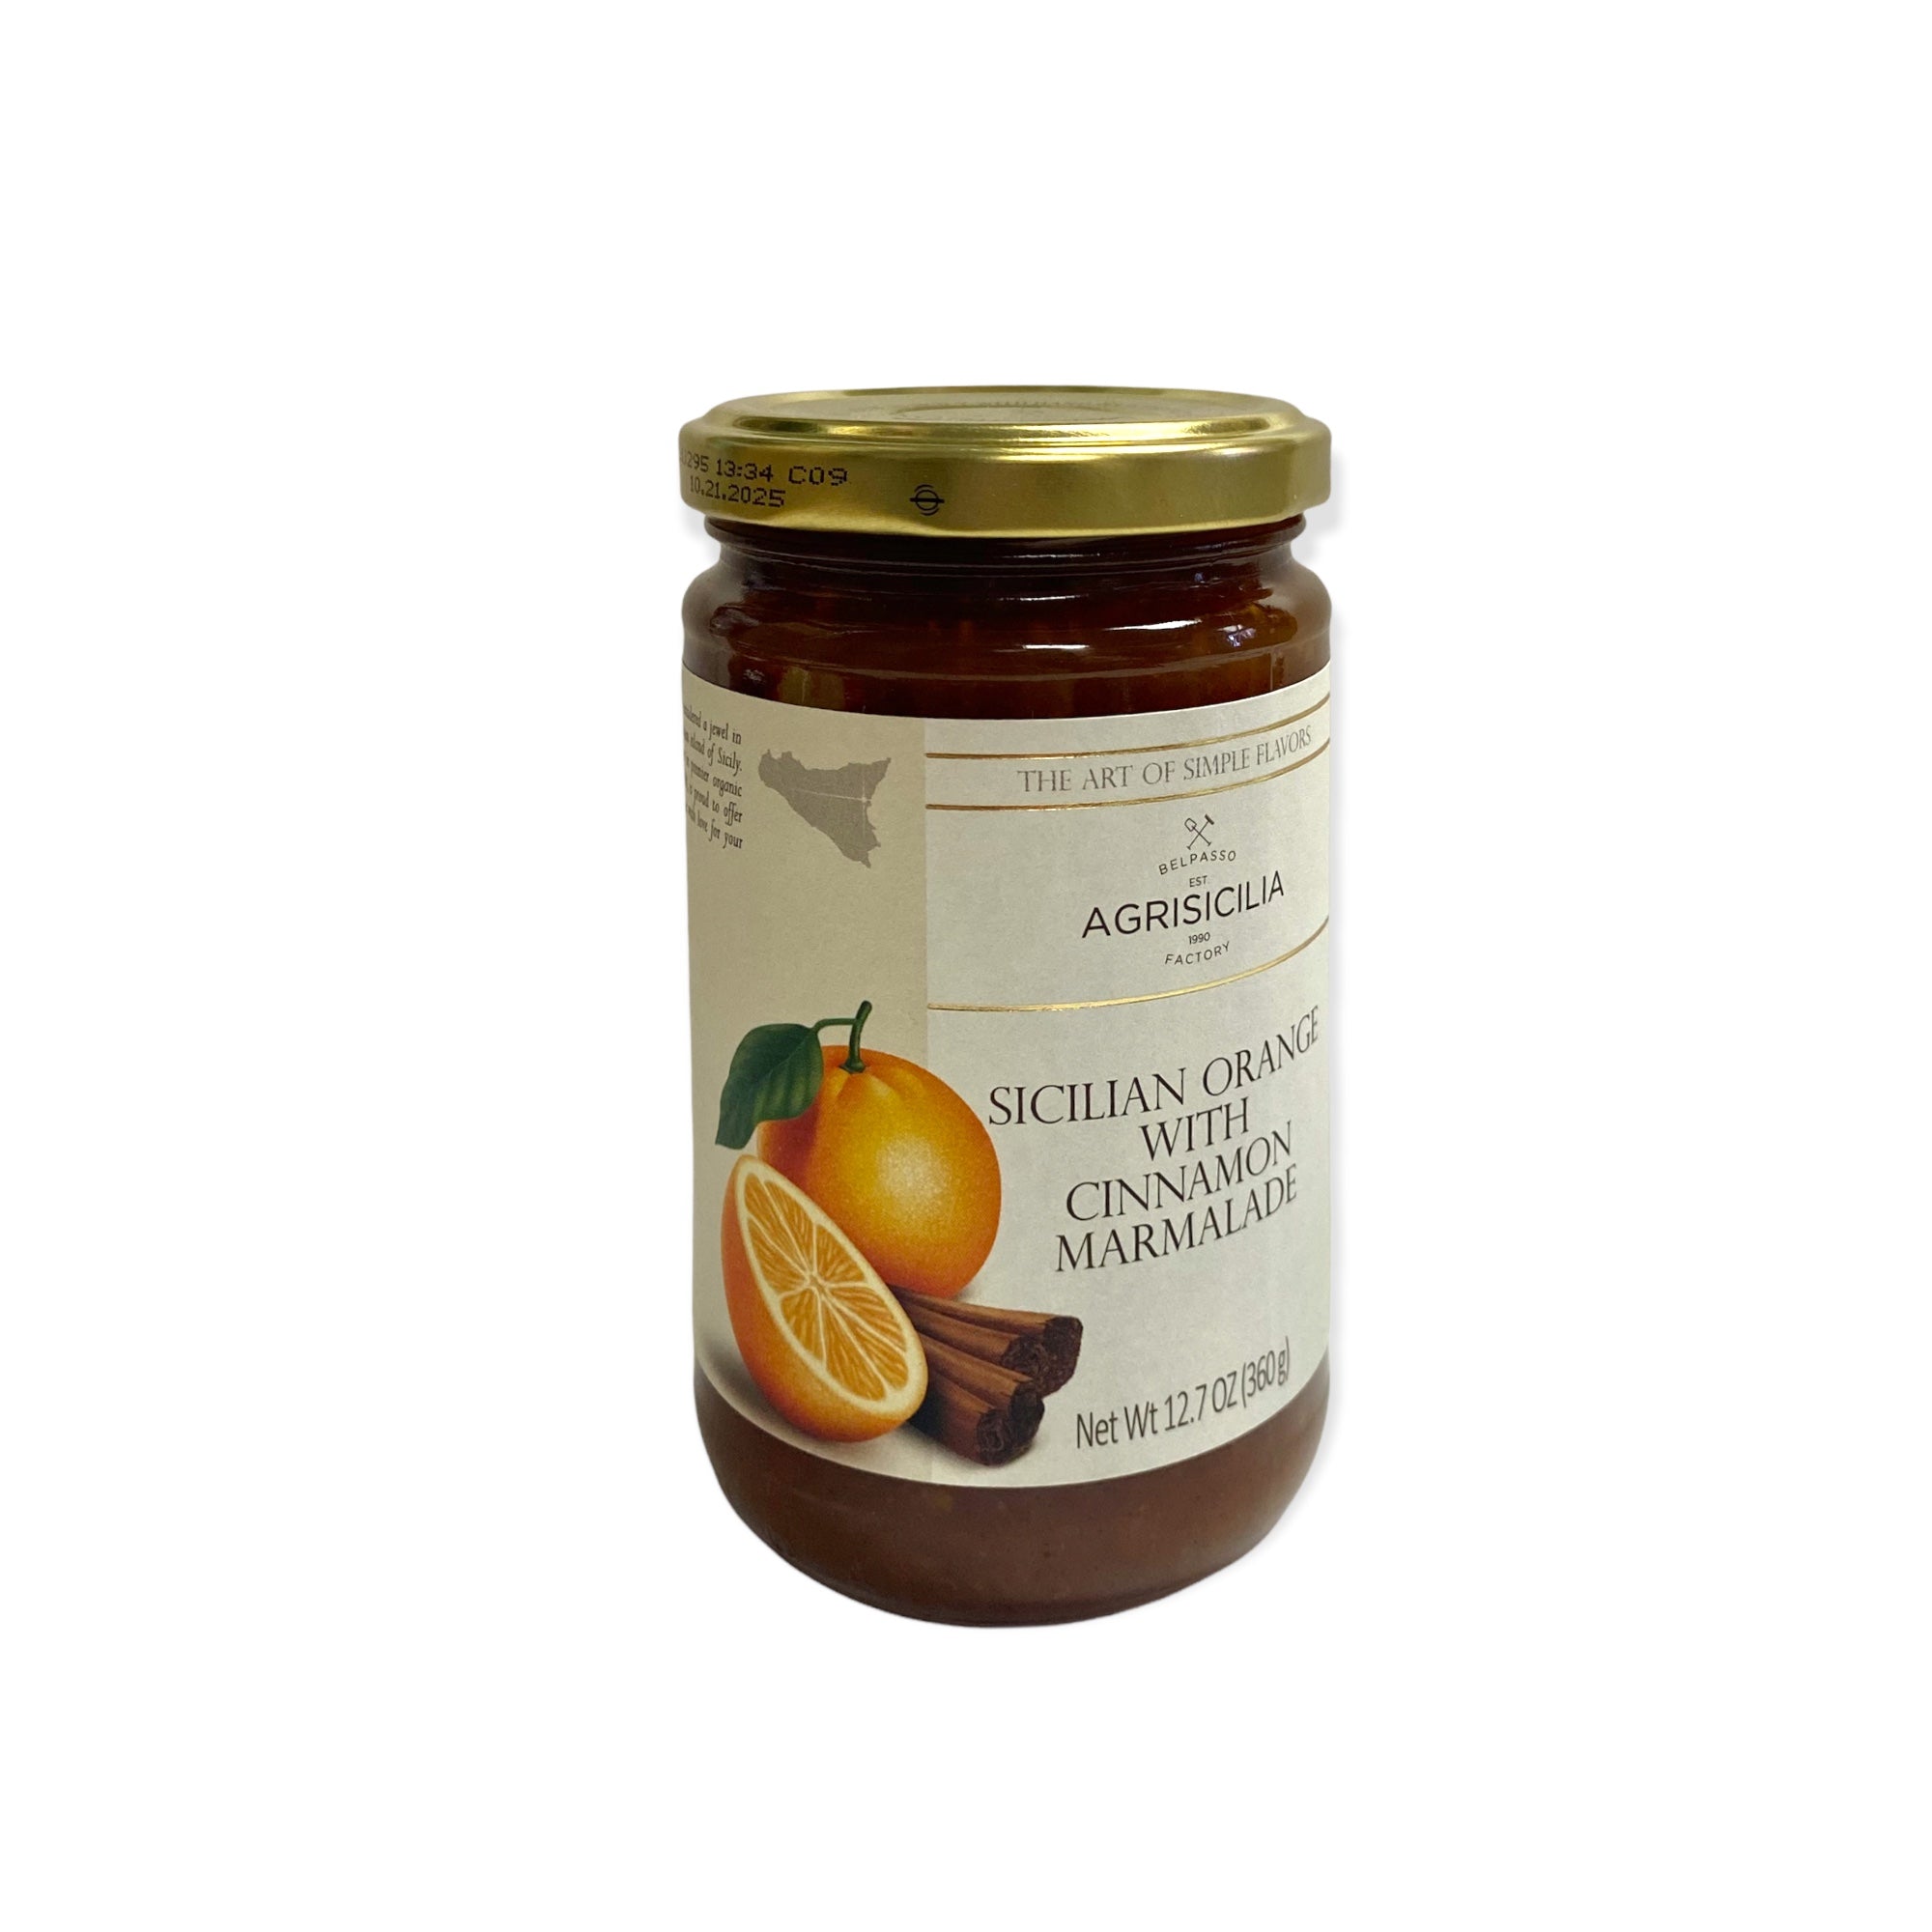 Agrisicilia Sicilian Orange With Cinnamon Marmelade 12.7oz (360g)